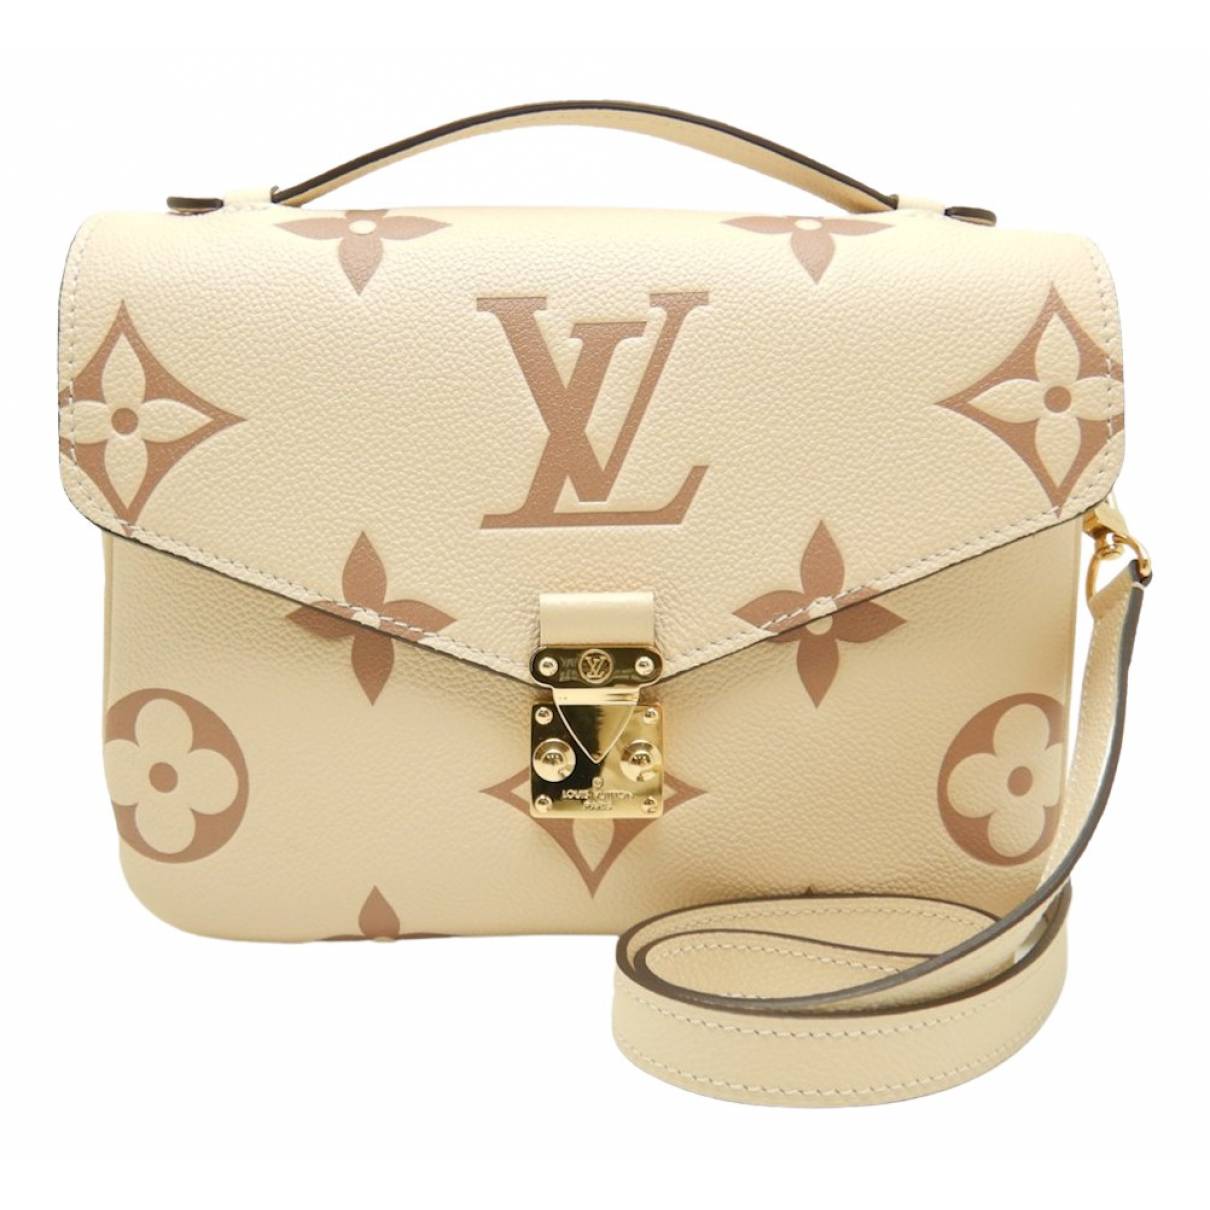 white Louis Vuitton Bags for Women - Vestiaire Collective